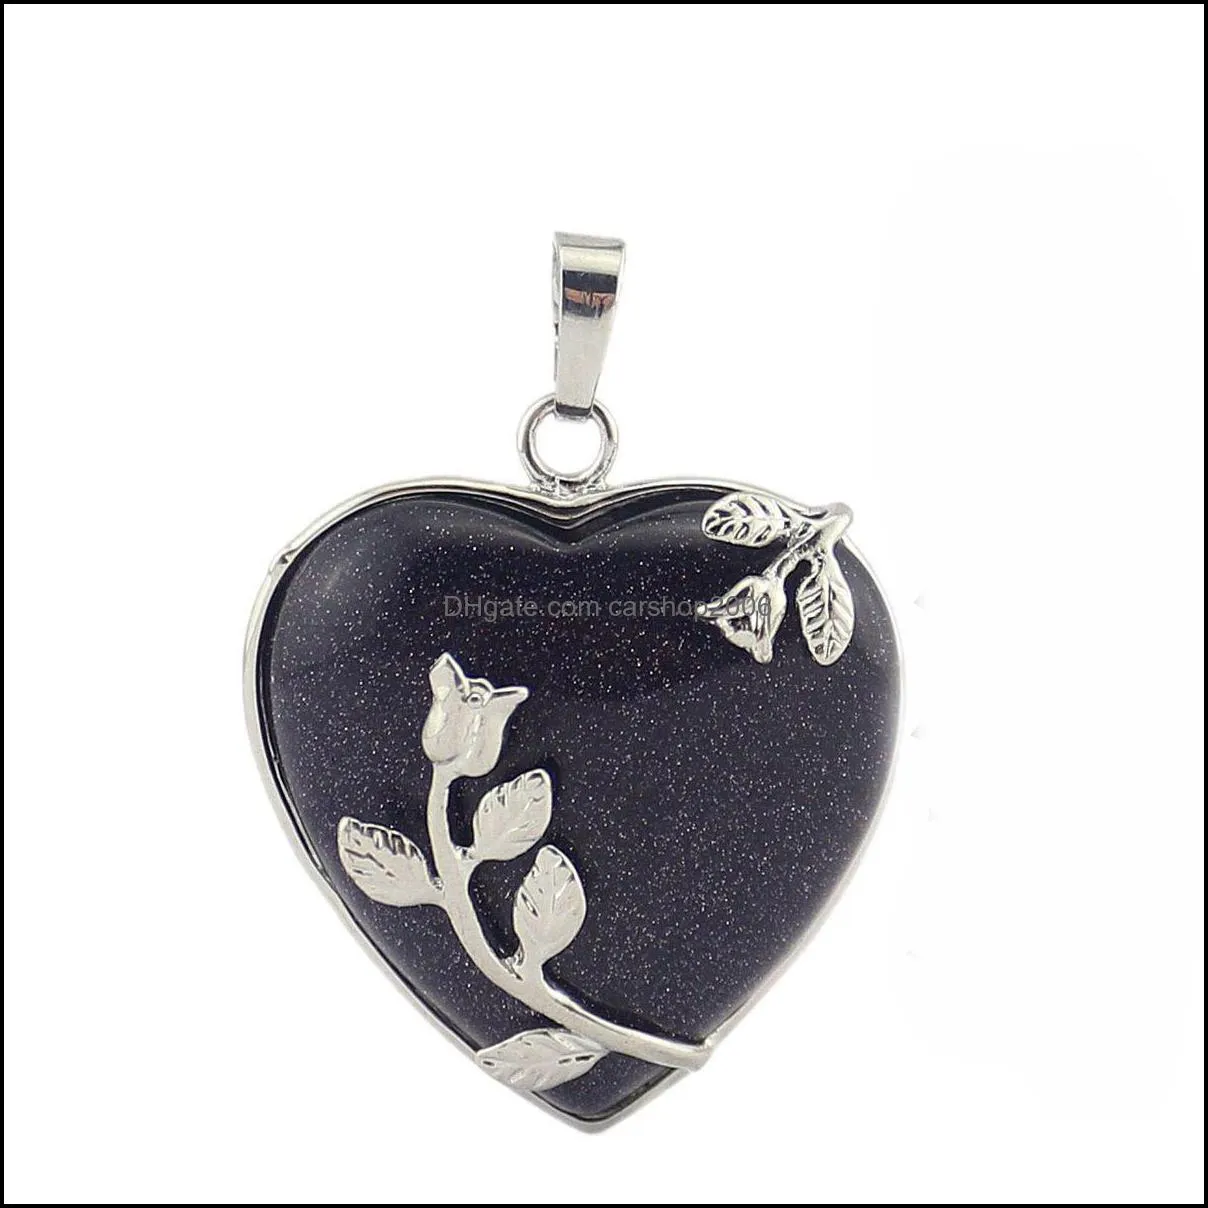 natural healing crystals heart pendant necklaces reiki quartz love metal heart gemstone choker jewelry for womens girls